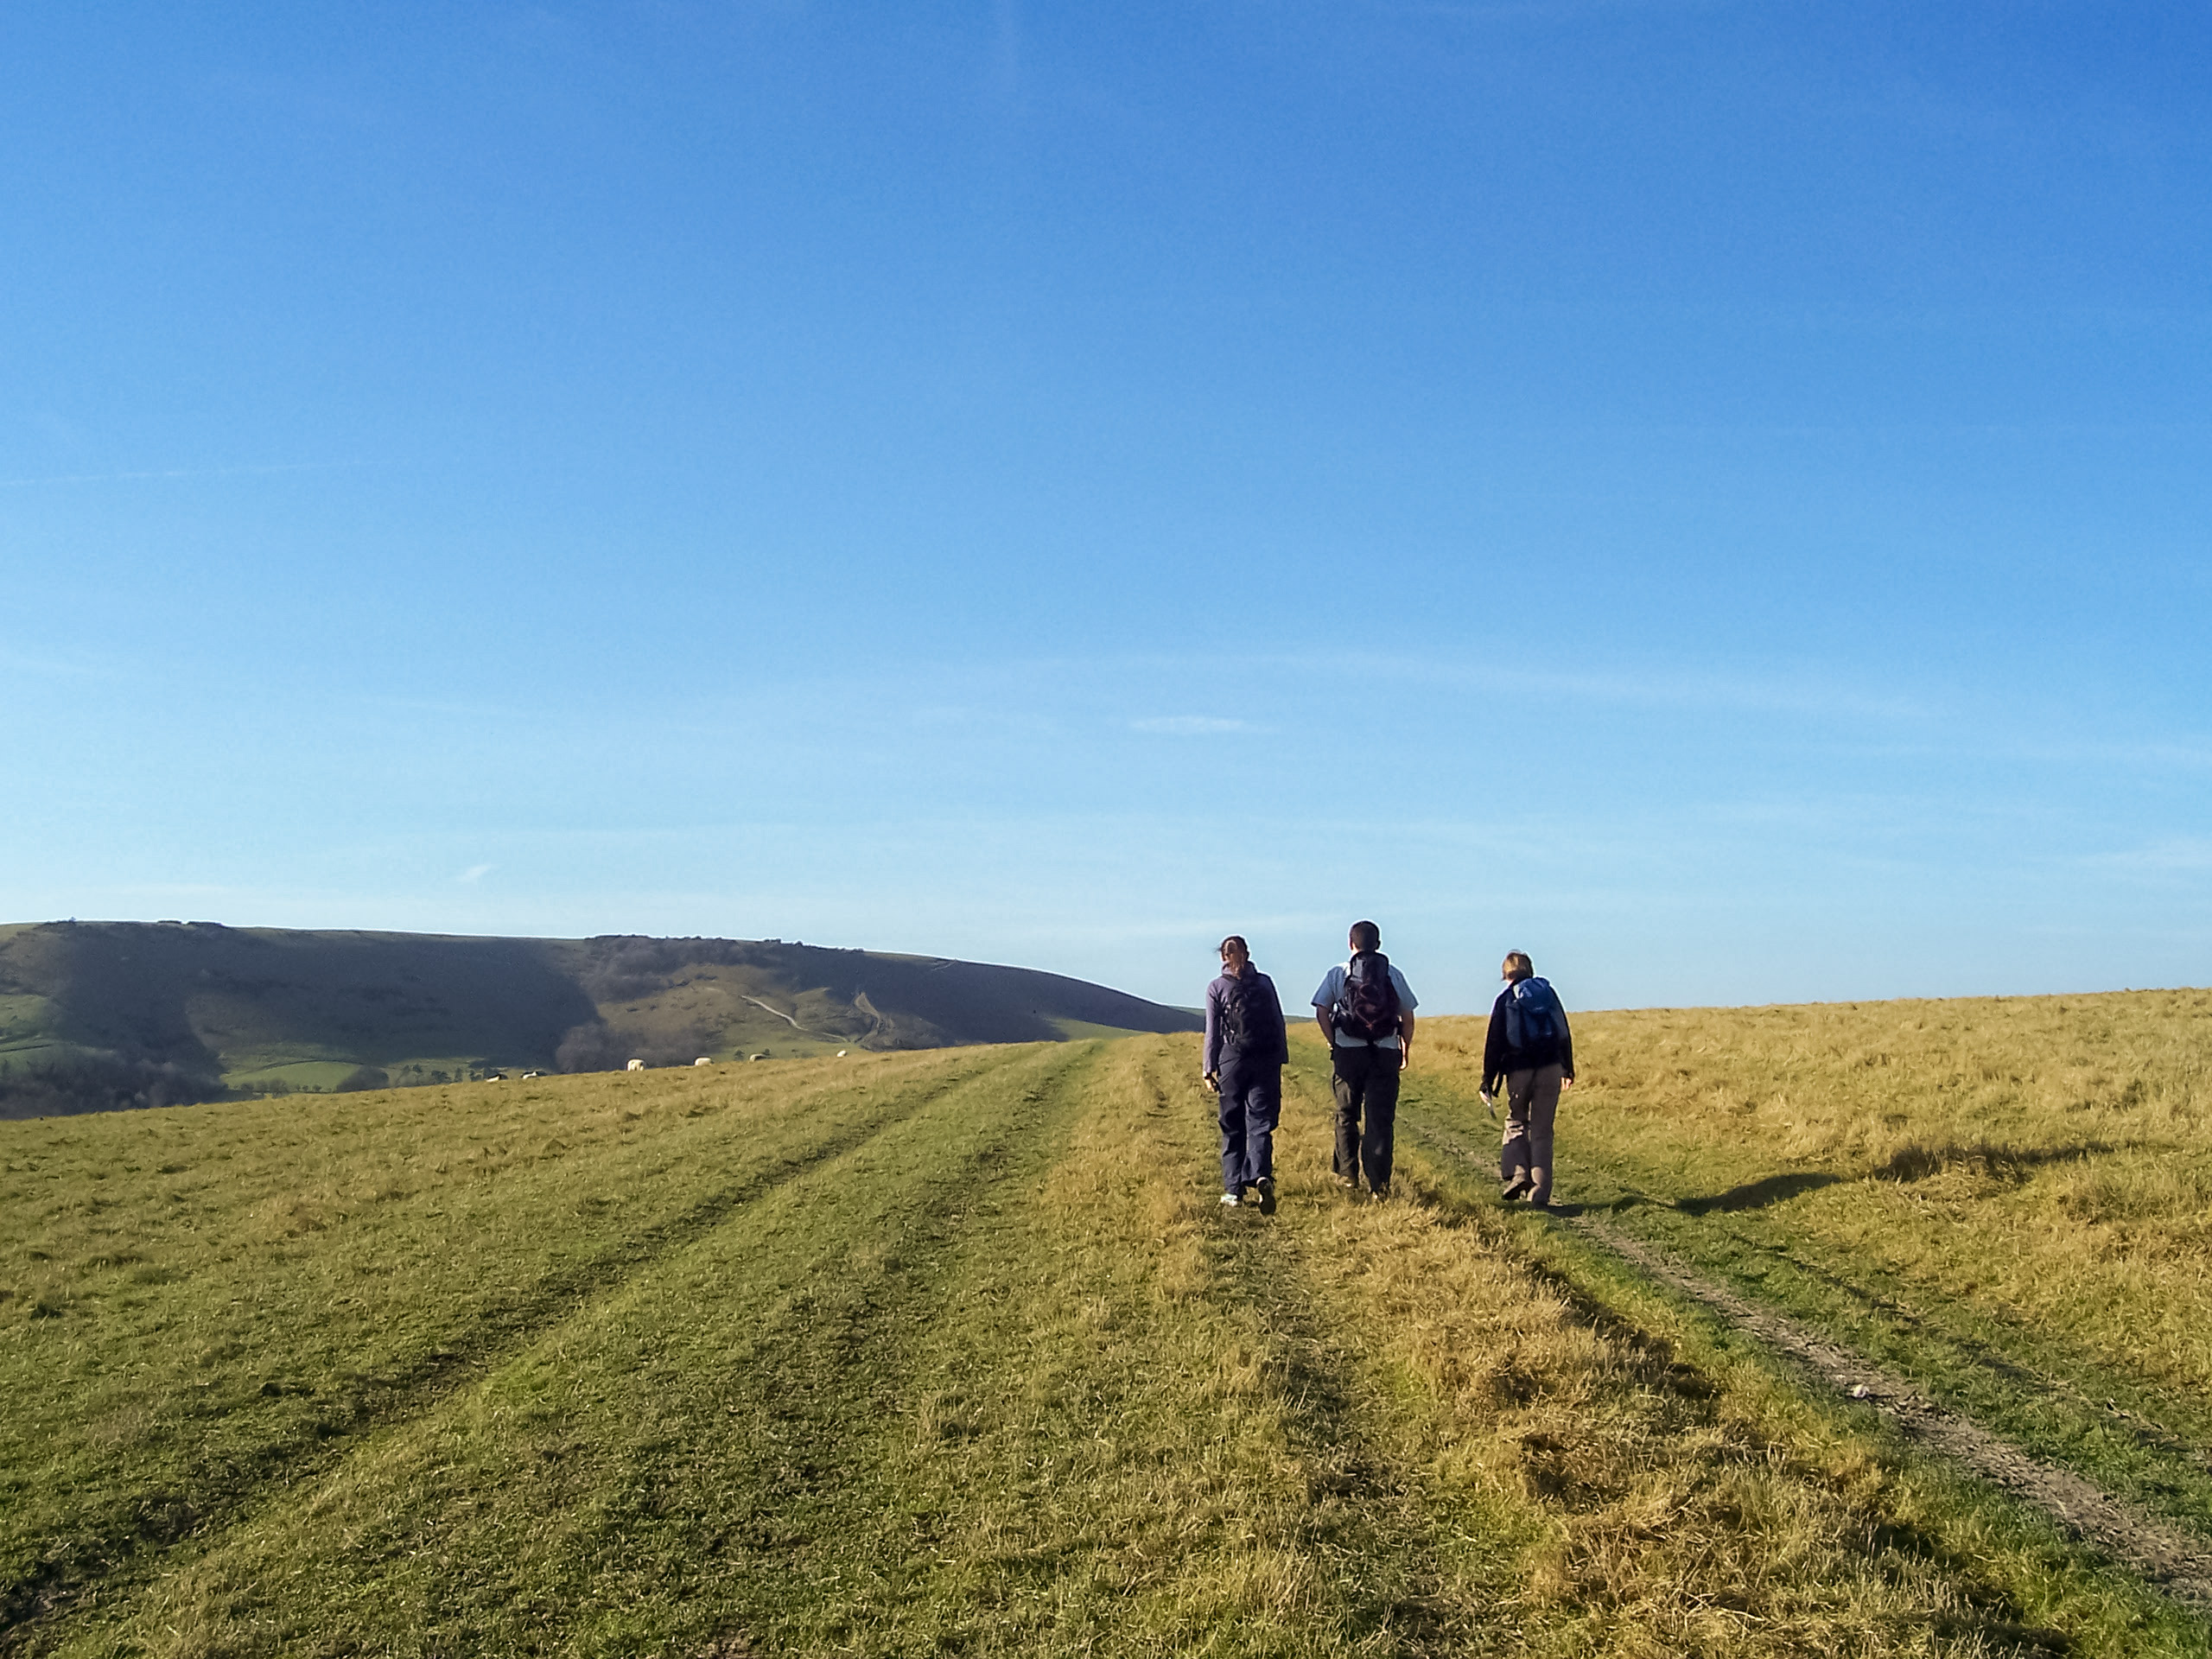 Near Lewes, the intrepid five walk through a field of sheep